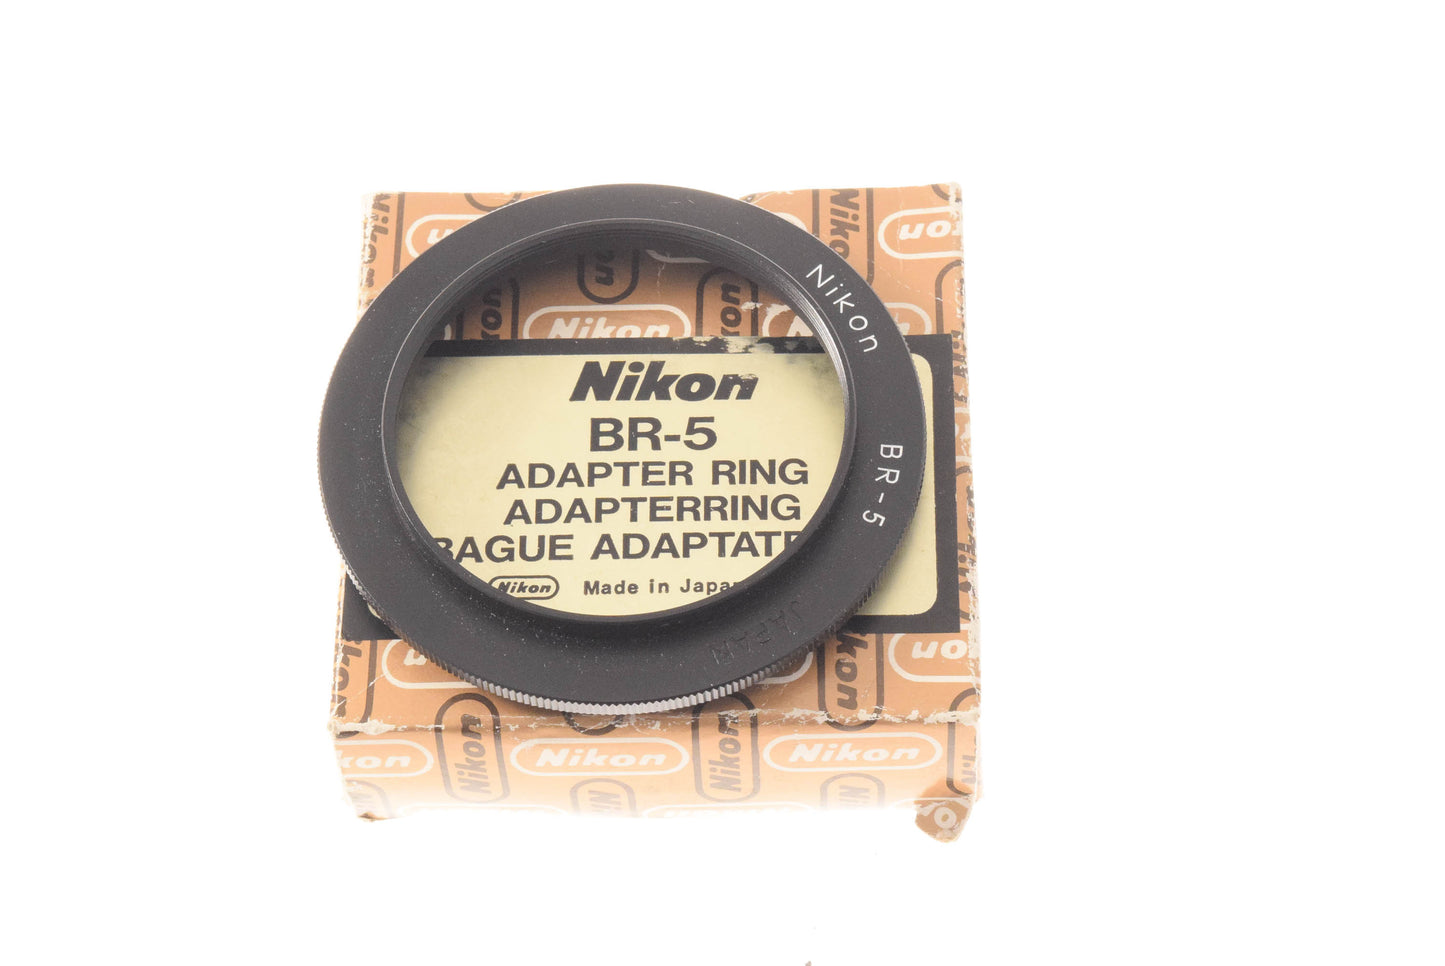 Nikon BR-5 Adapter Ring - Accessory